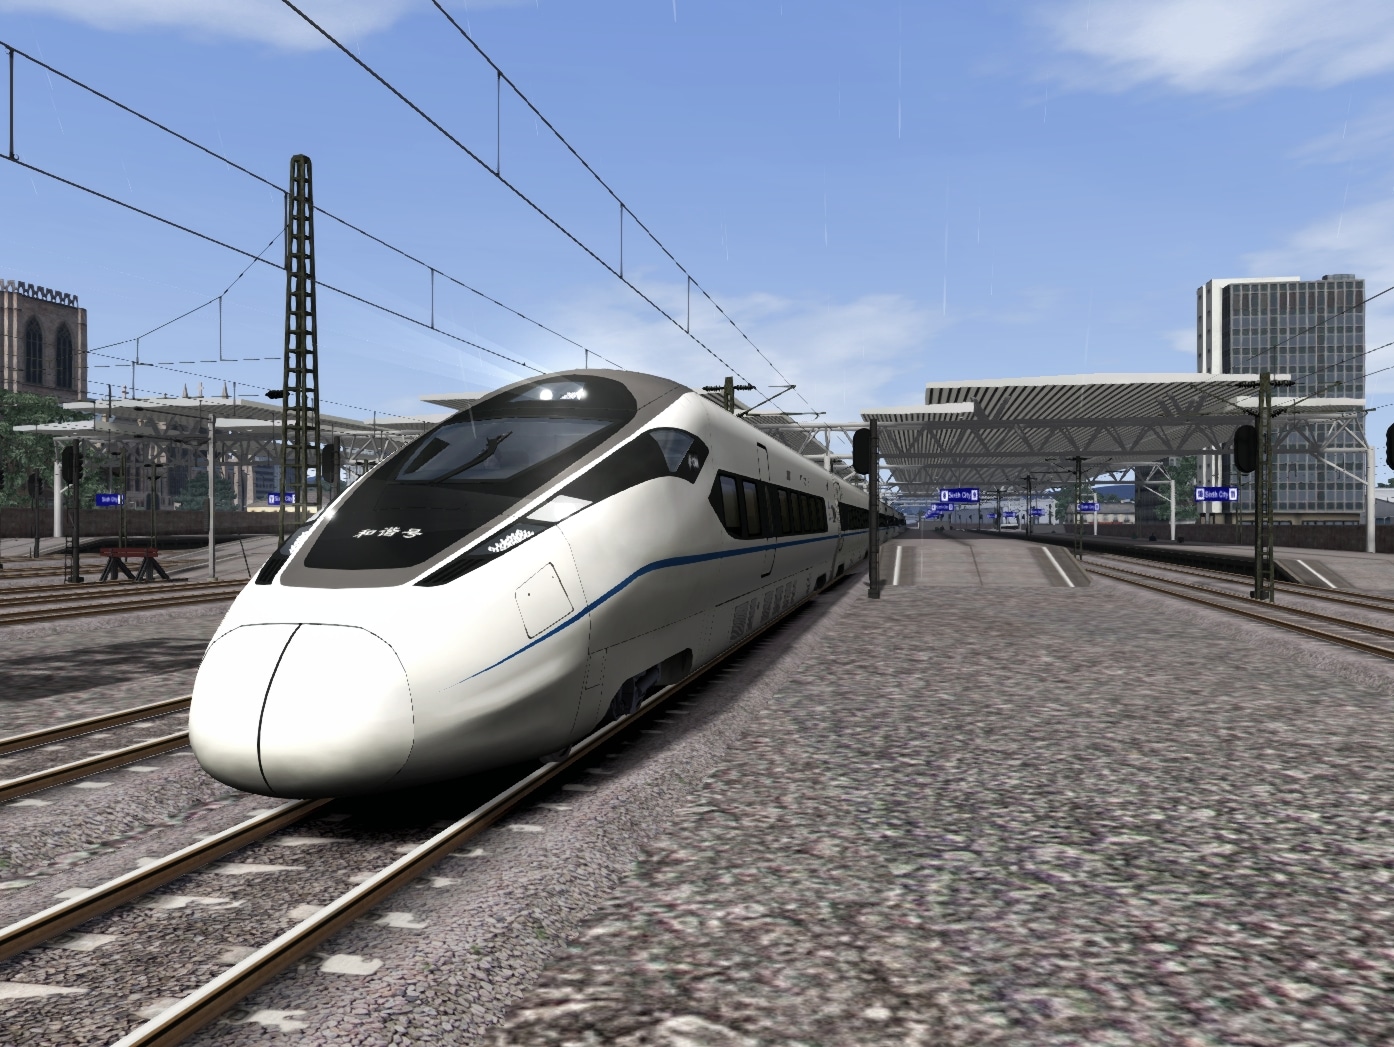 Hsr interactive. Crh380a. Поезд crh380a. Crh380d Trainz 2022. Траин симулятор 22.